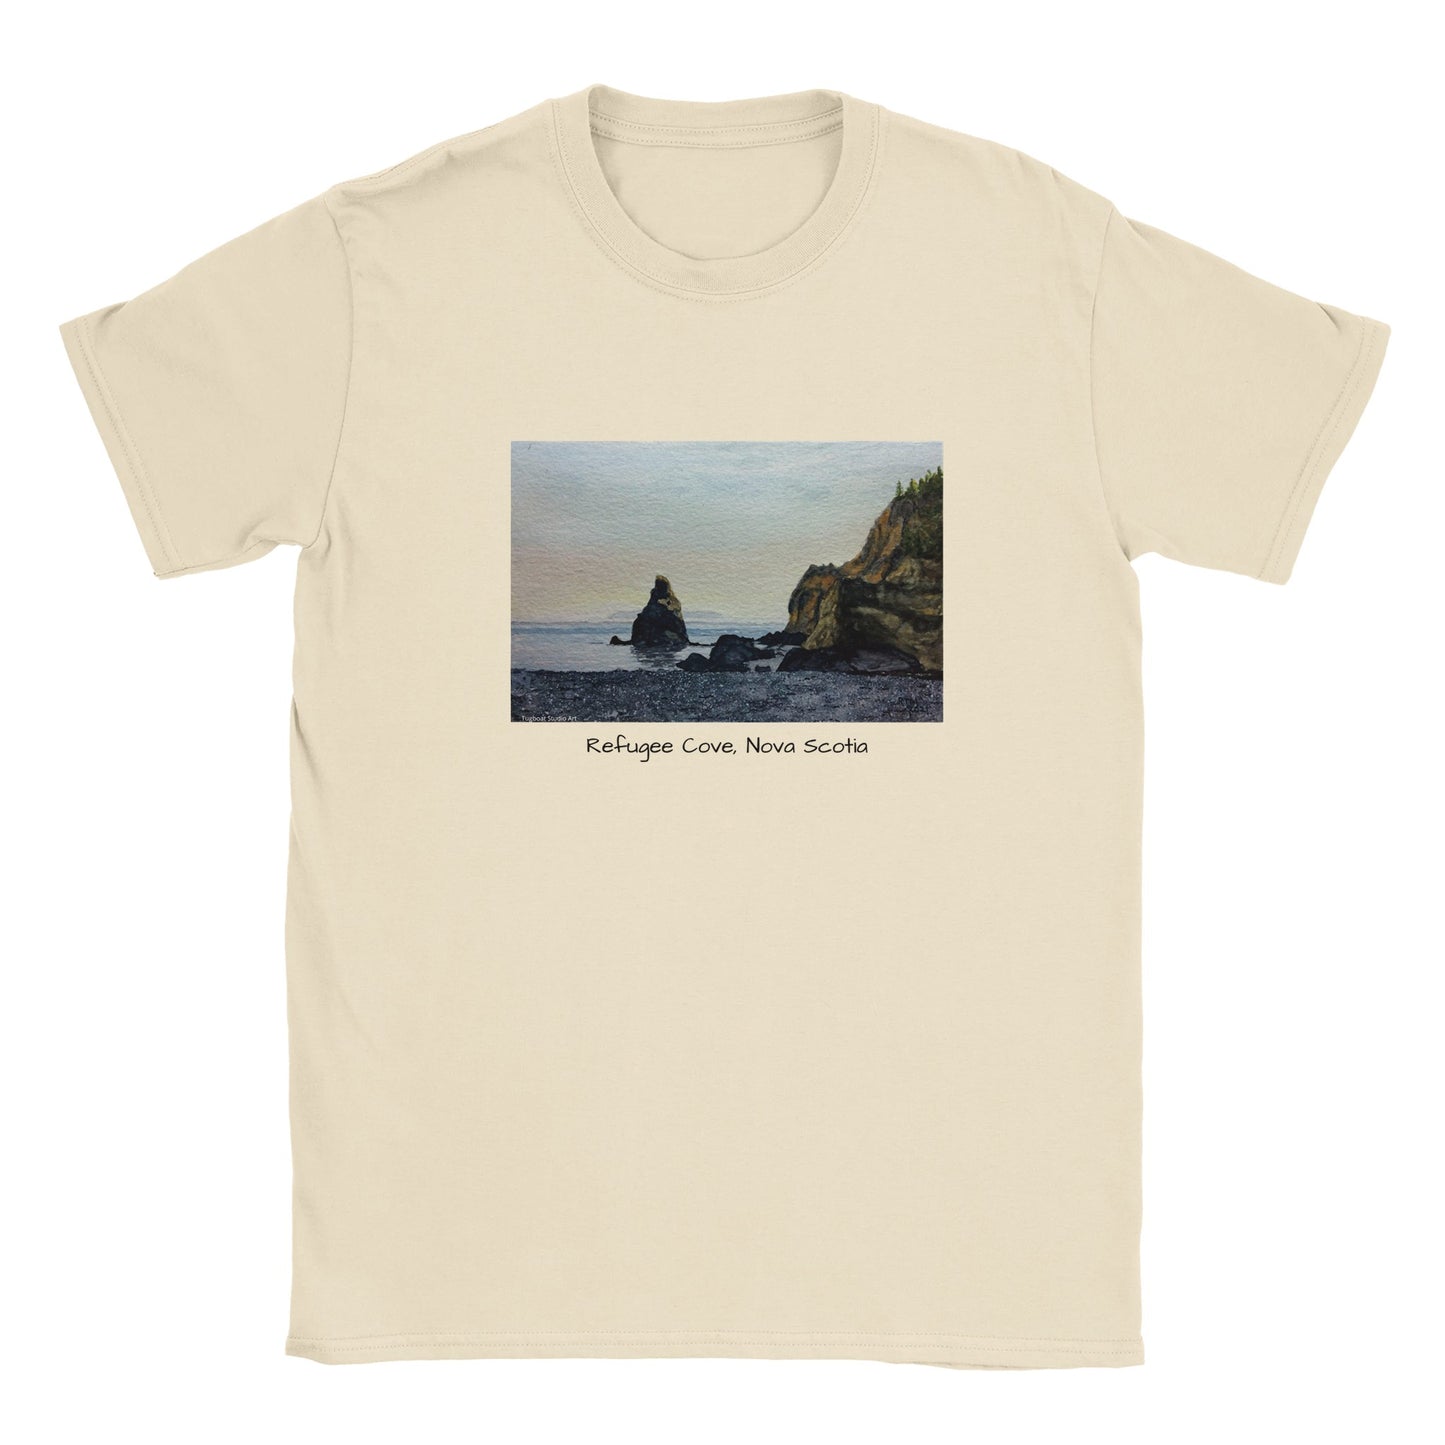 Refugee Cove T-shirt